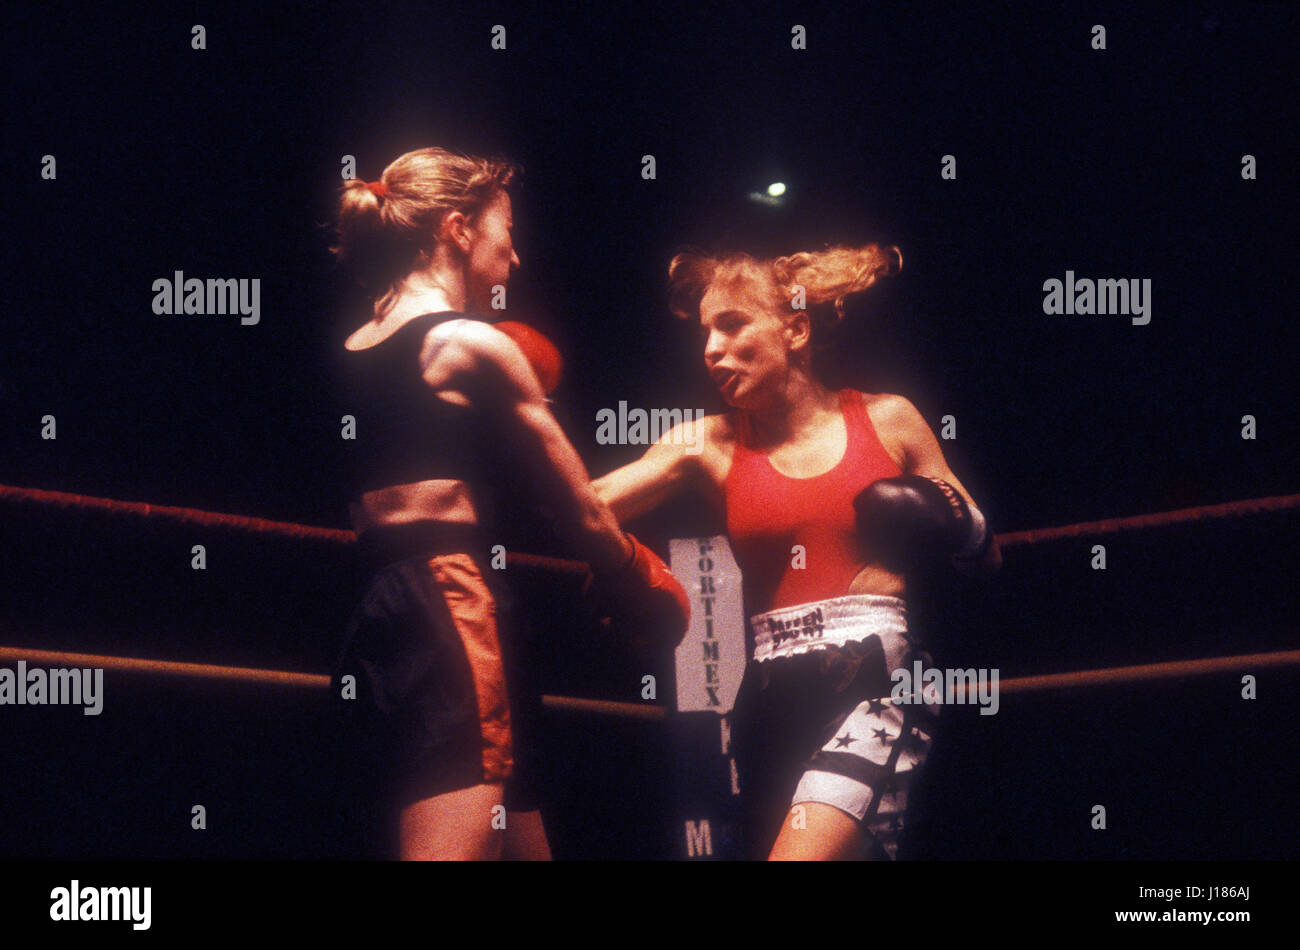 Regina Halmich vs. Finie Klee, 1994 Stock Photo